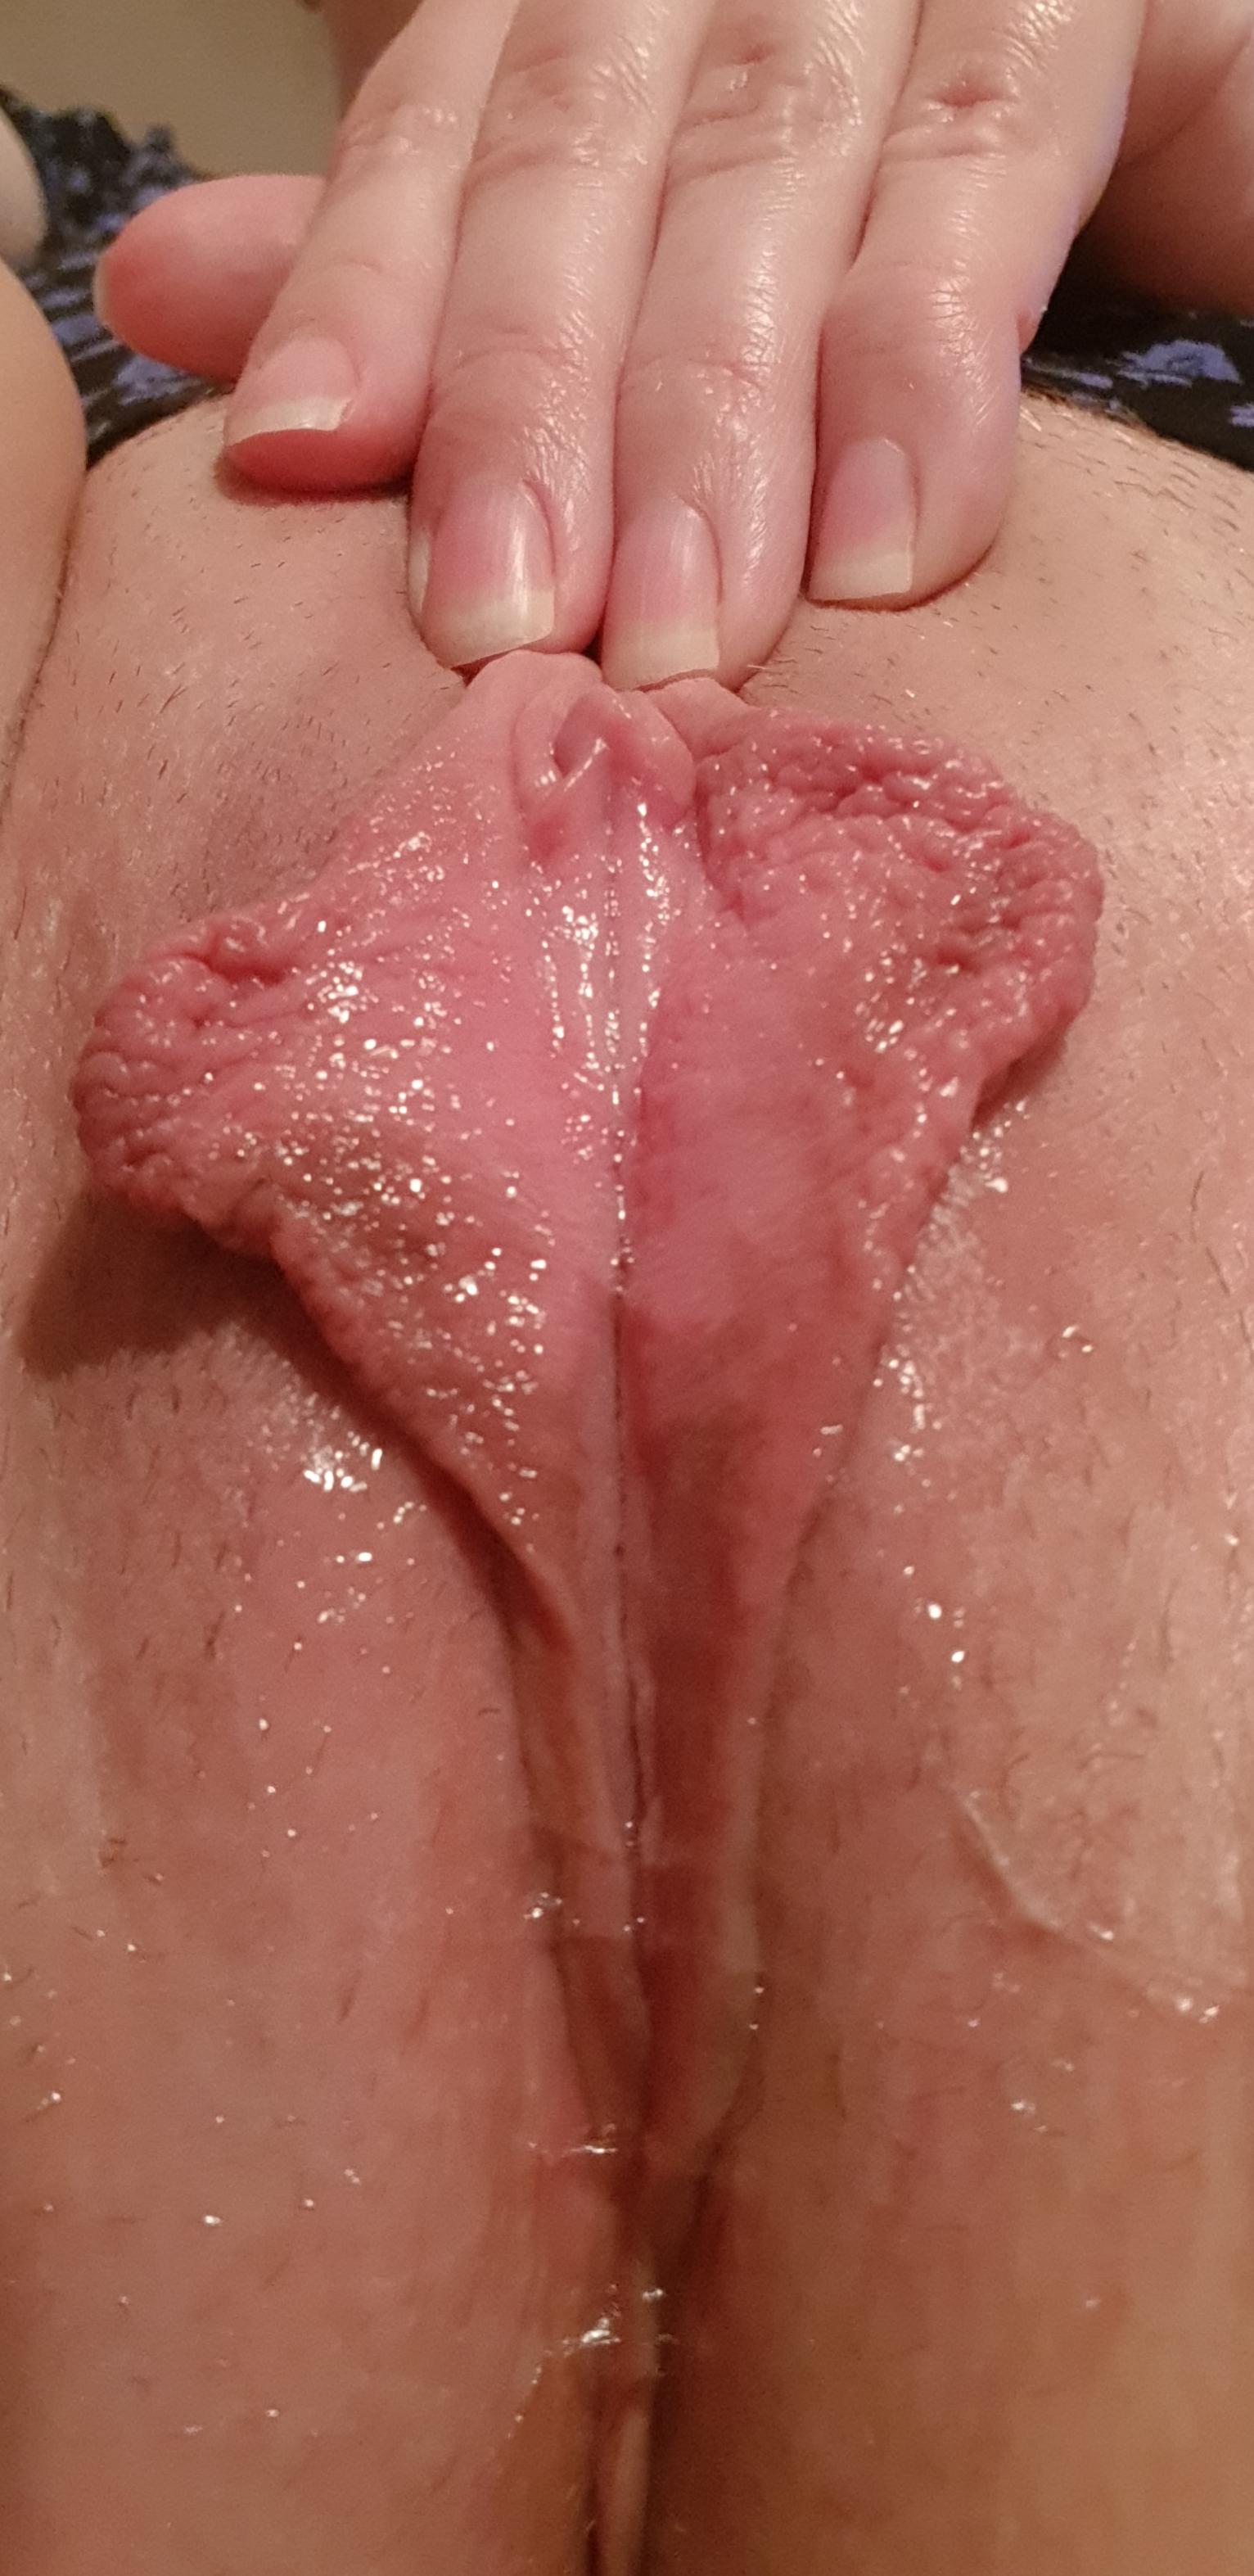 Big Wet Ebony Pussy Lips - Do you like really wet pussy lips